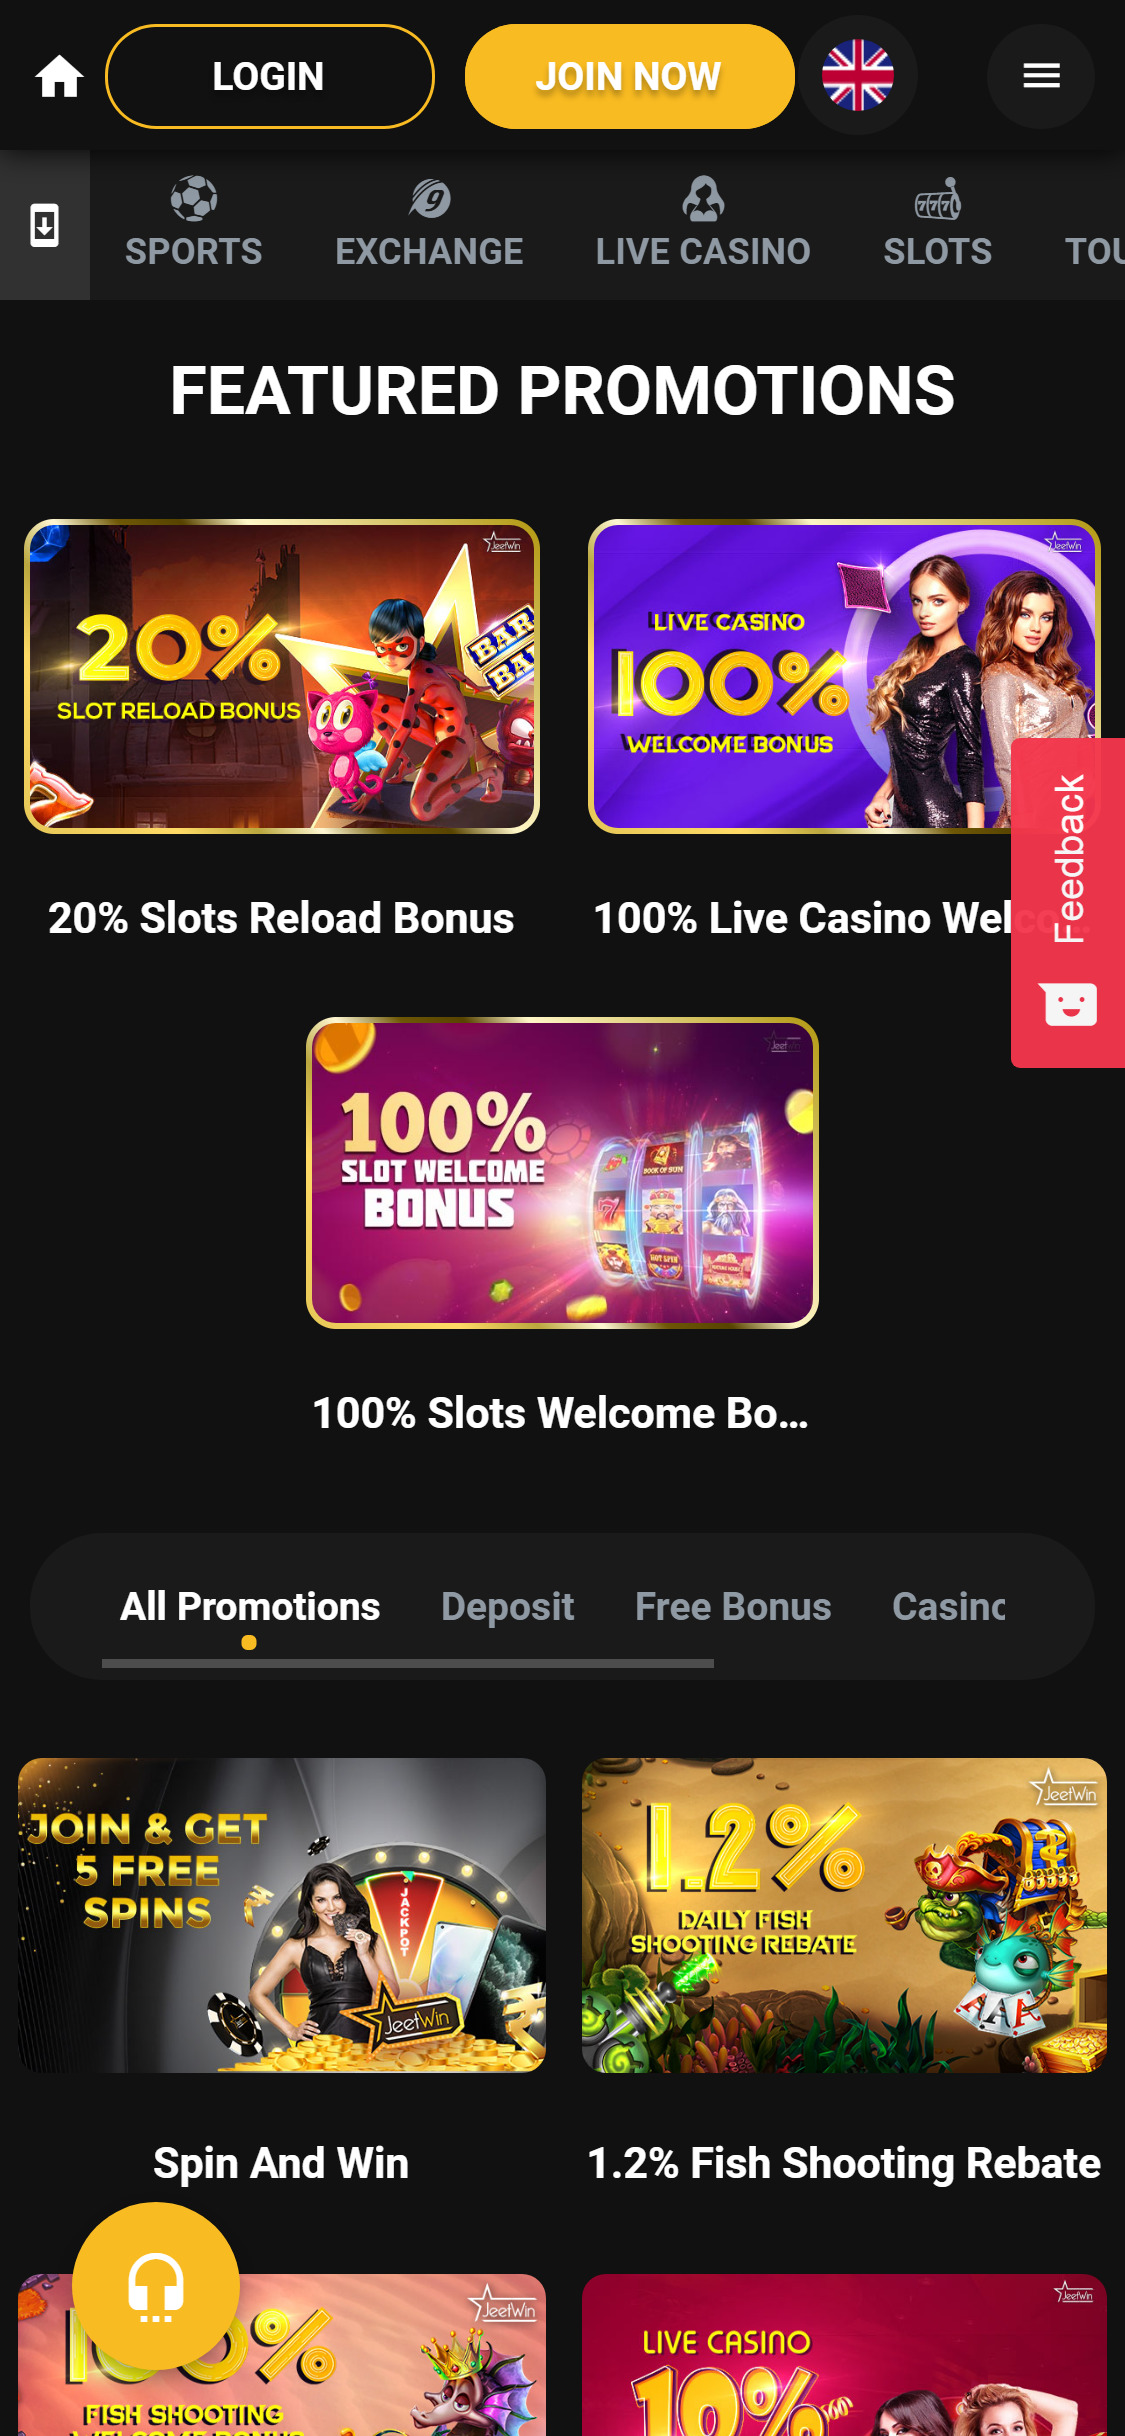 JeetWin Casino Mobile No Deposit Bonus Review